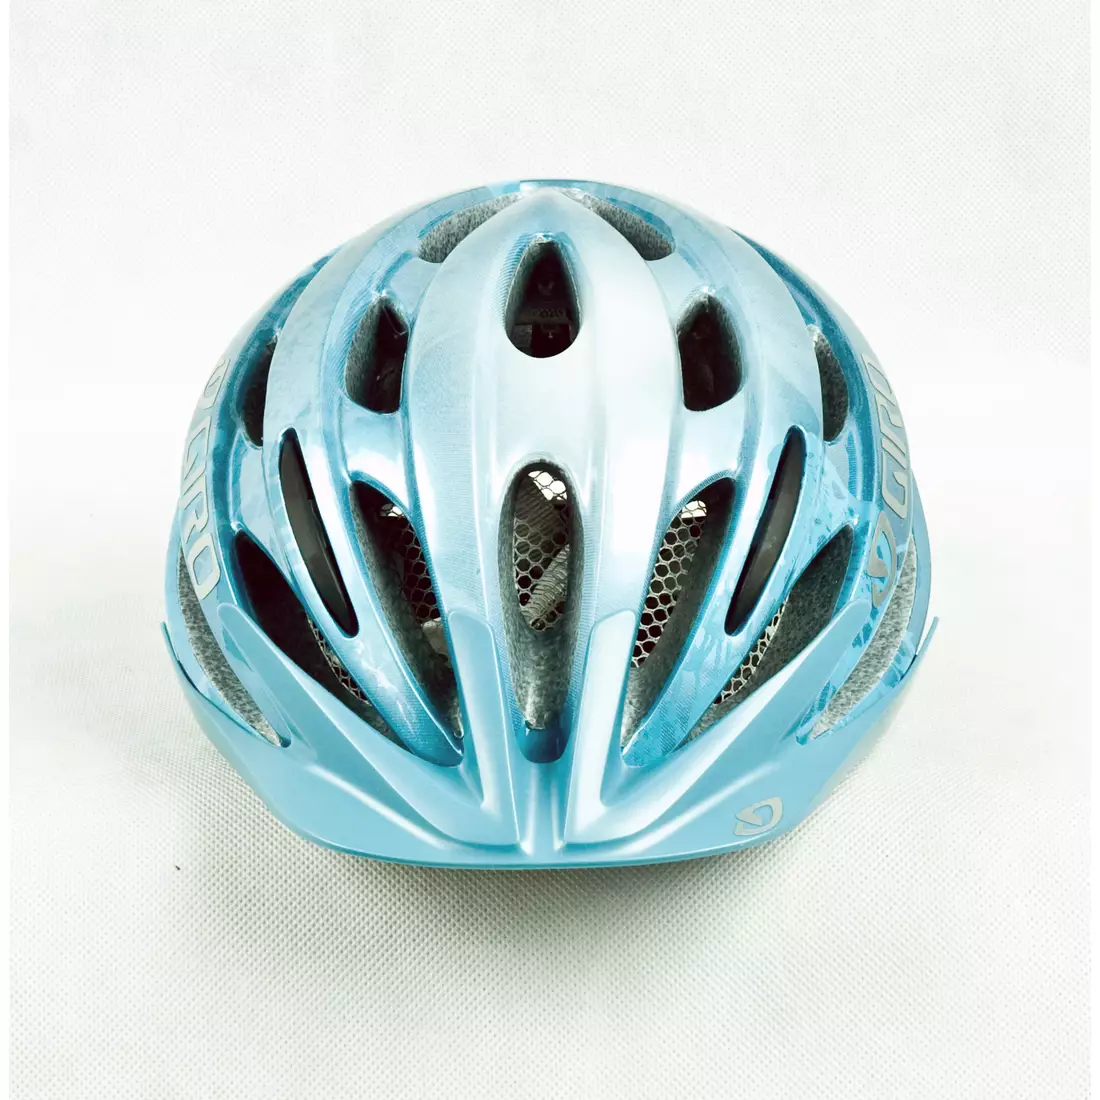 Dámská cyklistická přilba GIRO VERONA, světle modrá